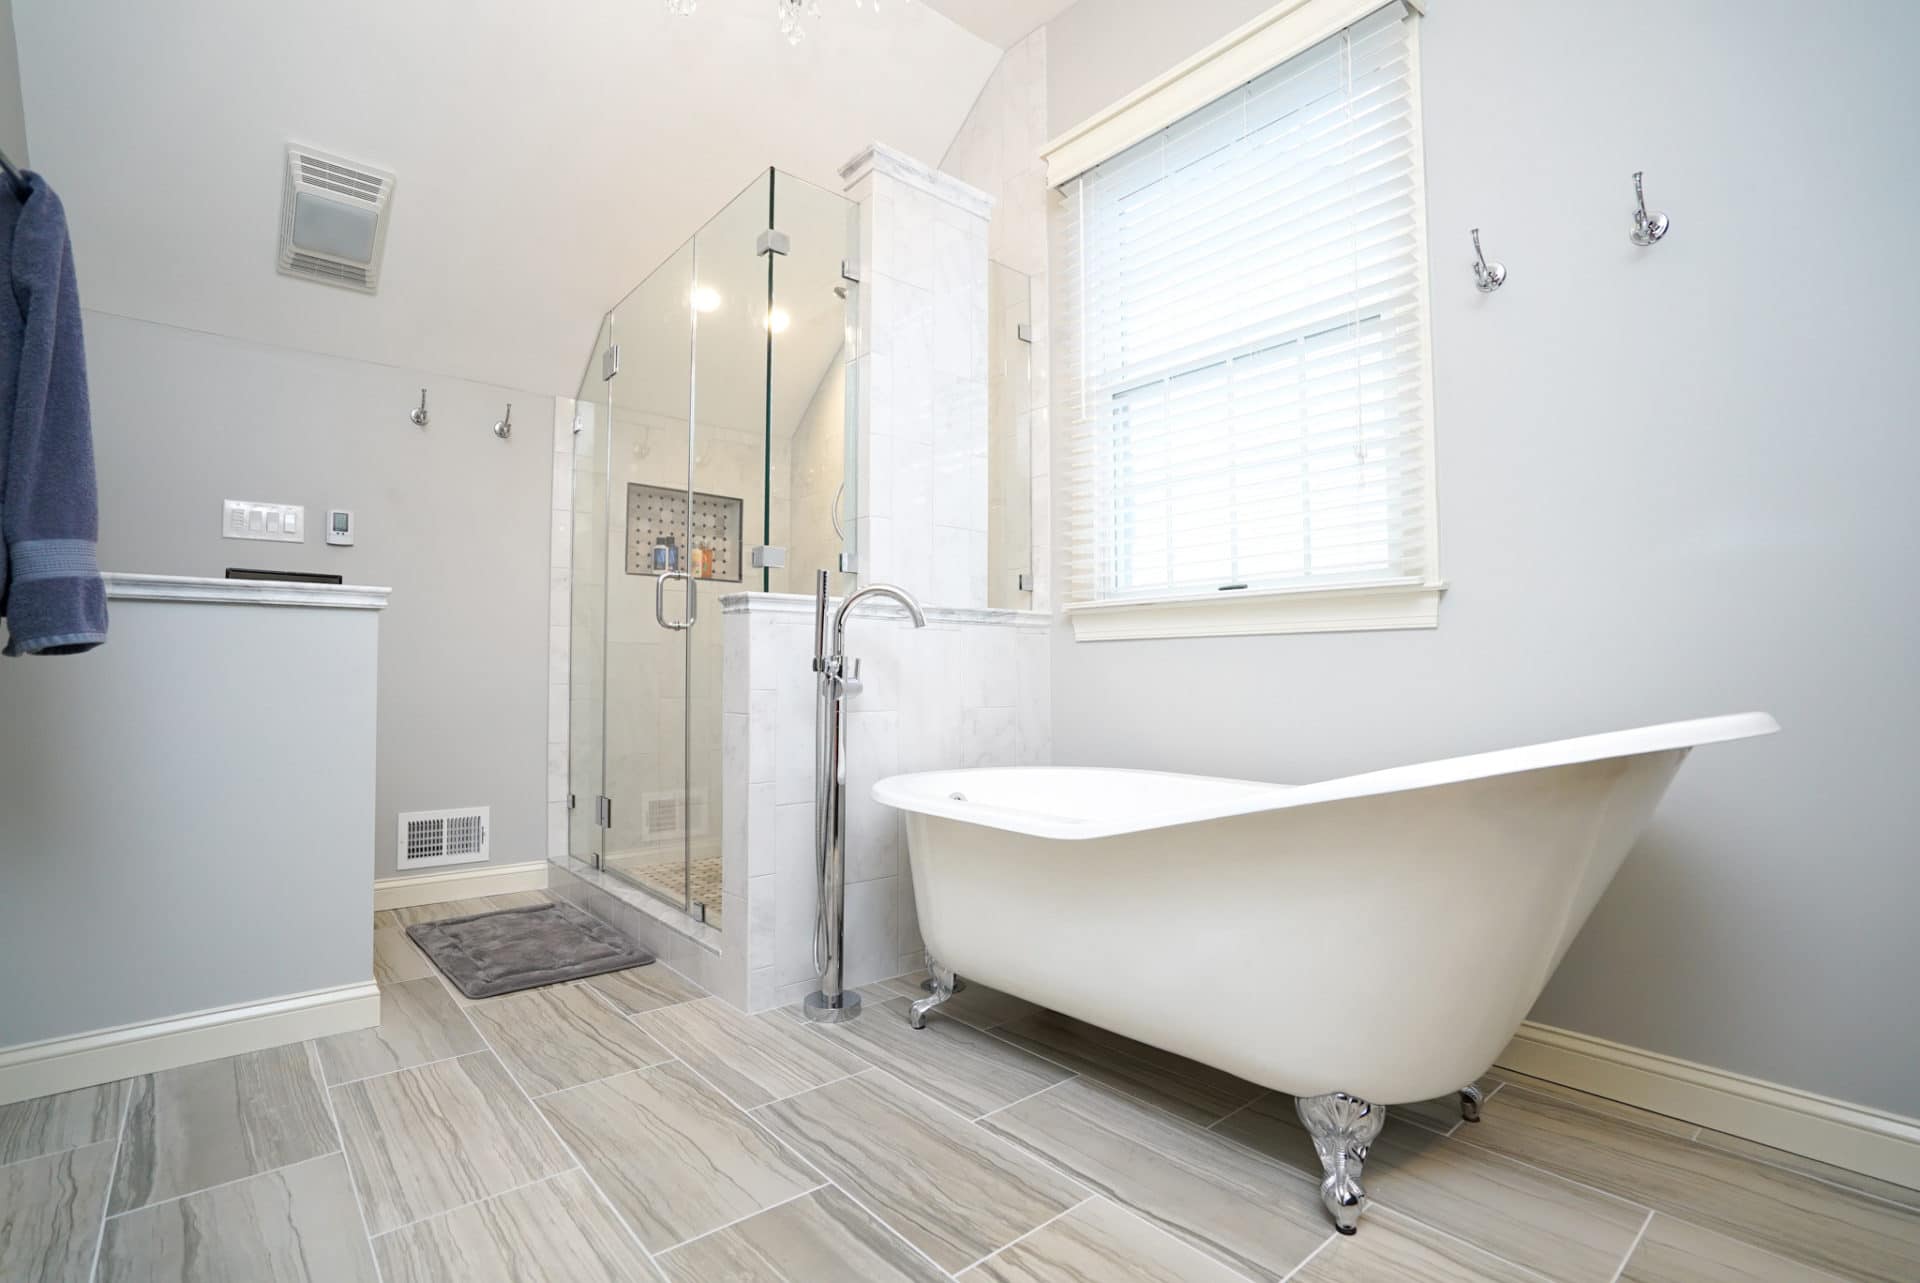 Bathroom remodel with laminate floor